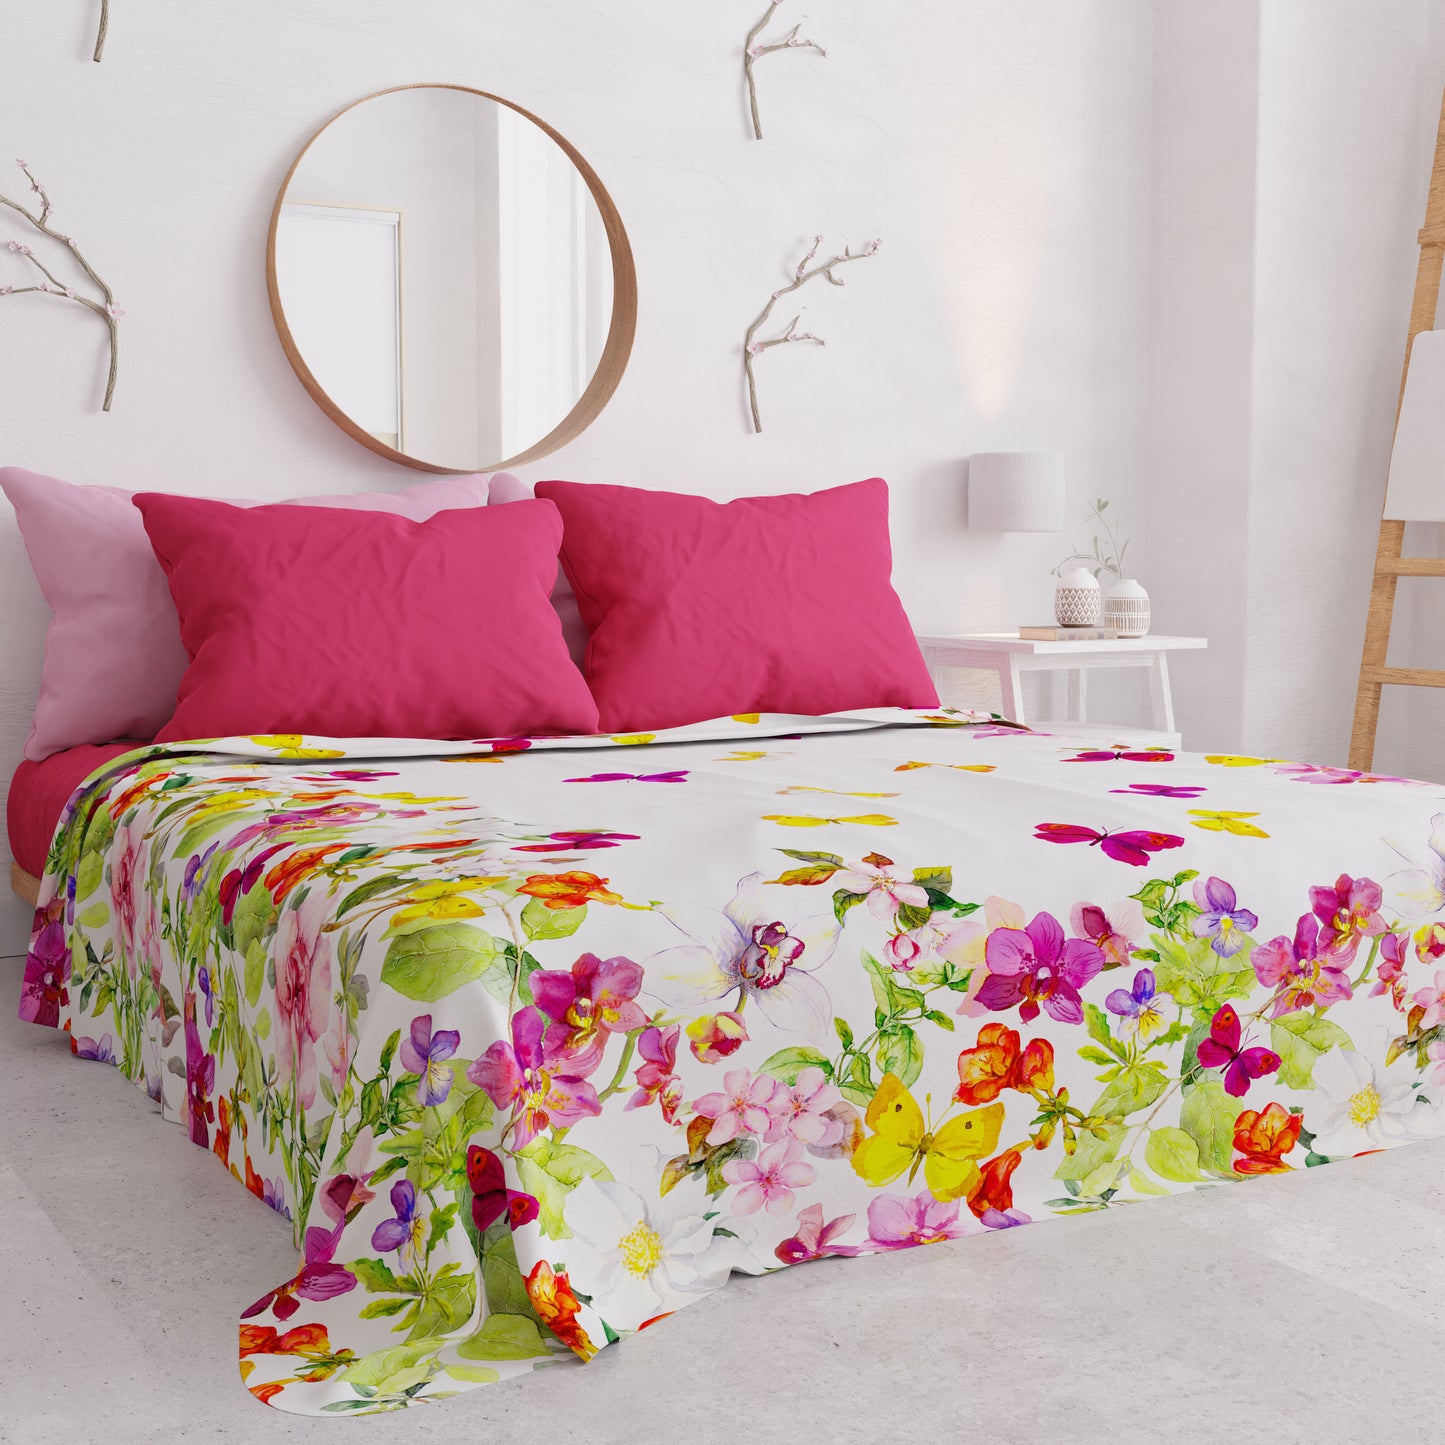 Summer Bedspread, Light Blanket, Bedspread Sheets Butterflies